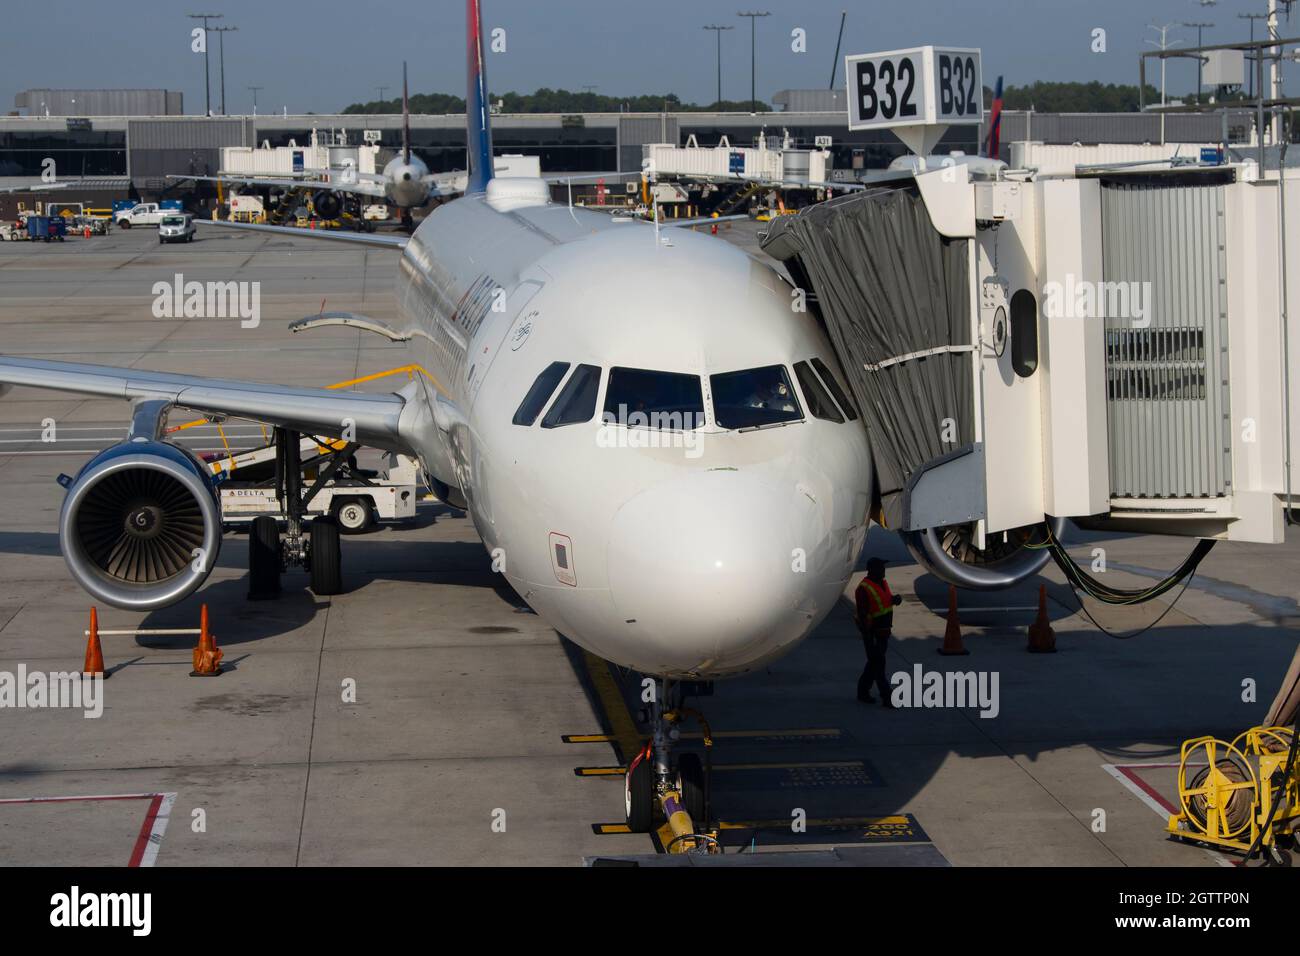 September 14, 2021 - A Delta airlines commercial jet at Hartsfield–Jackson Atlanta International Airport. Stock Photo